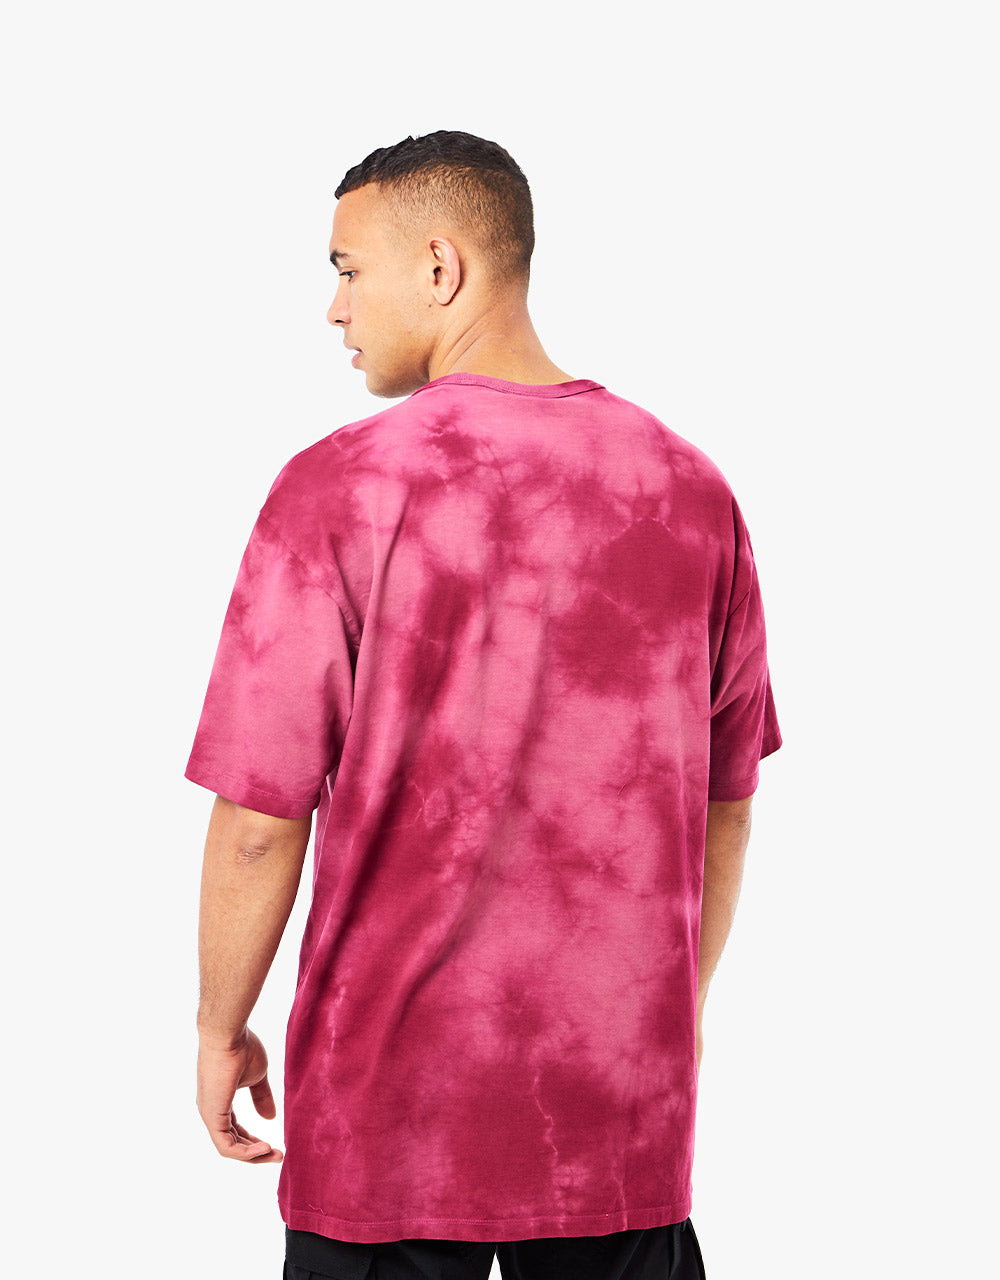 Vans Off The Wall Spot Tie Dye T-Shirt - Raspberry Radiance